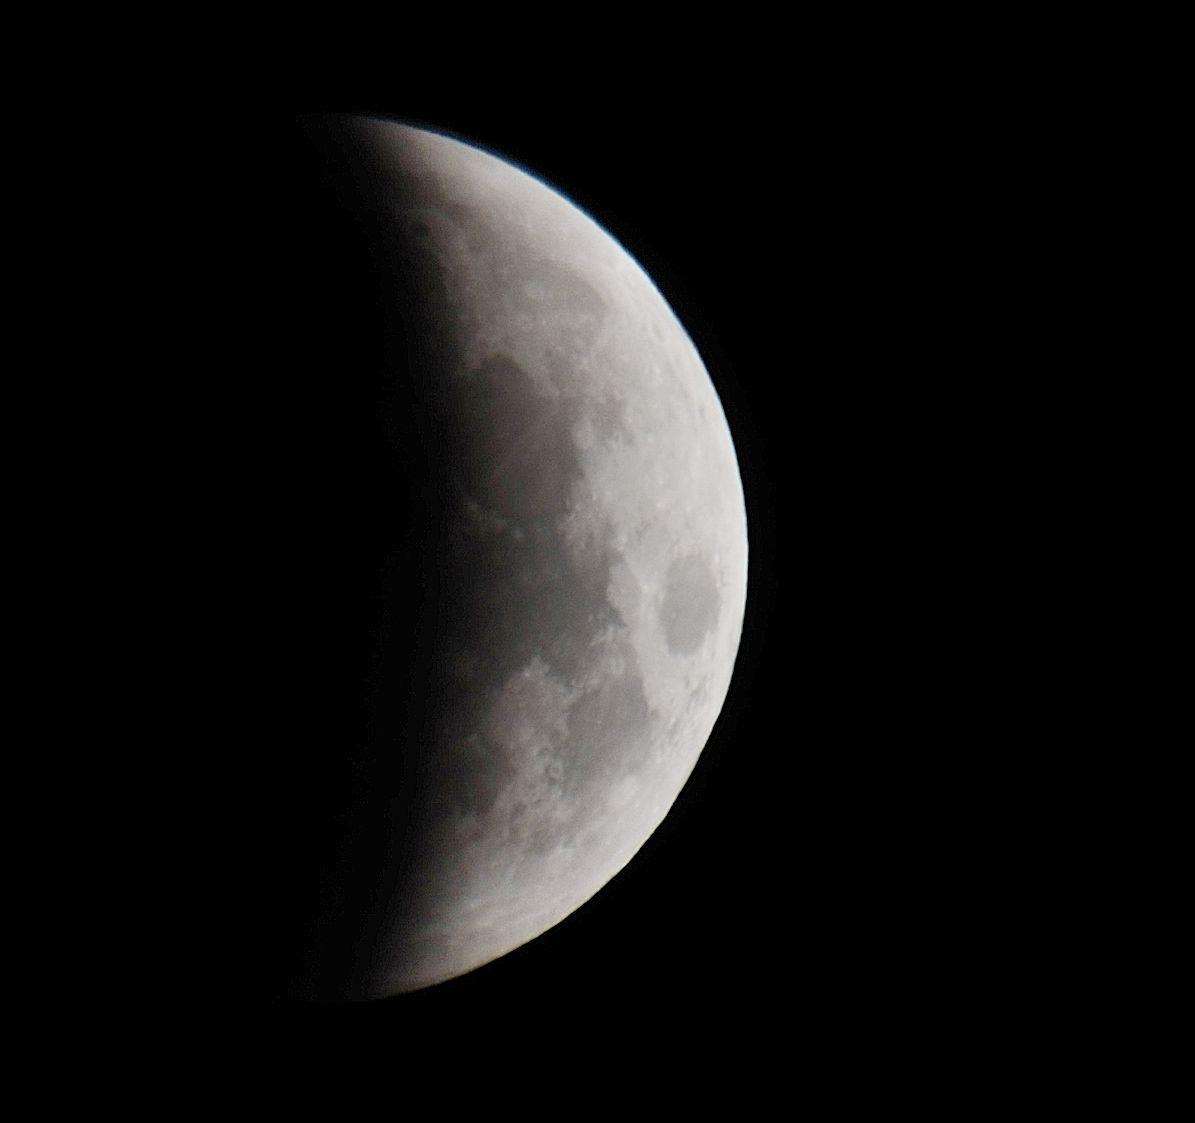 Jason Arthur from Gravesend shared this lunar eclipse snap